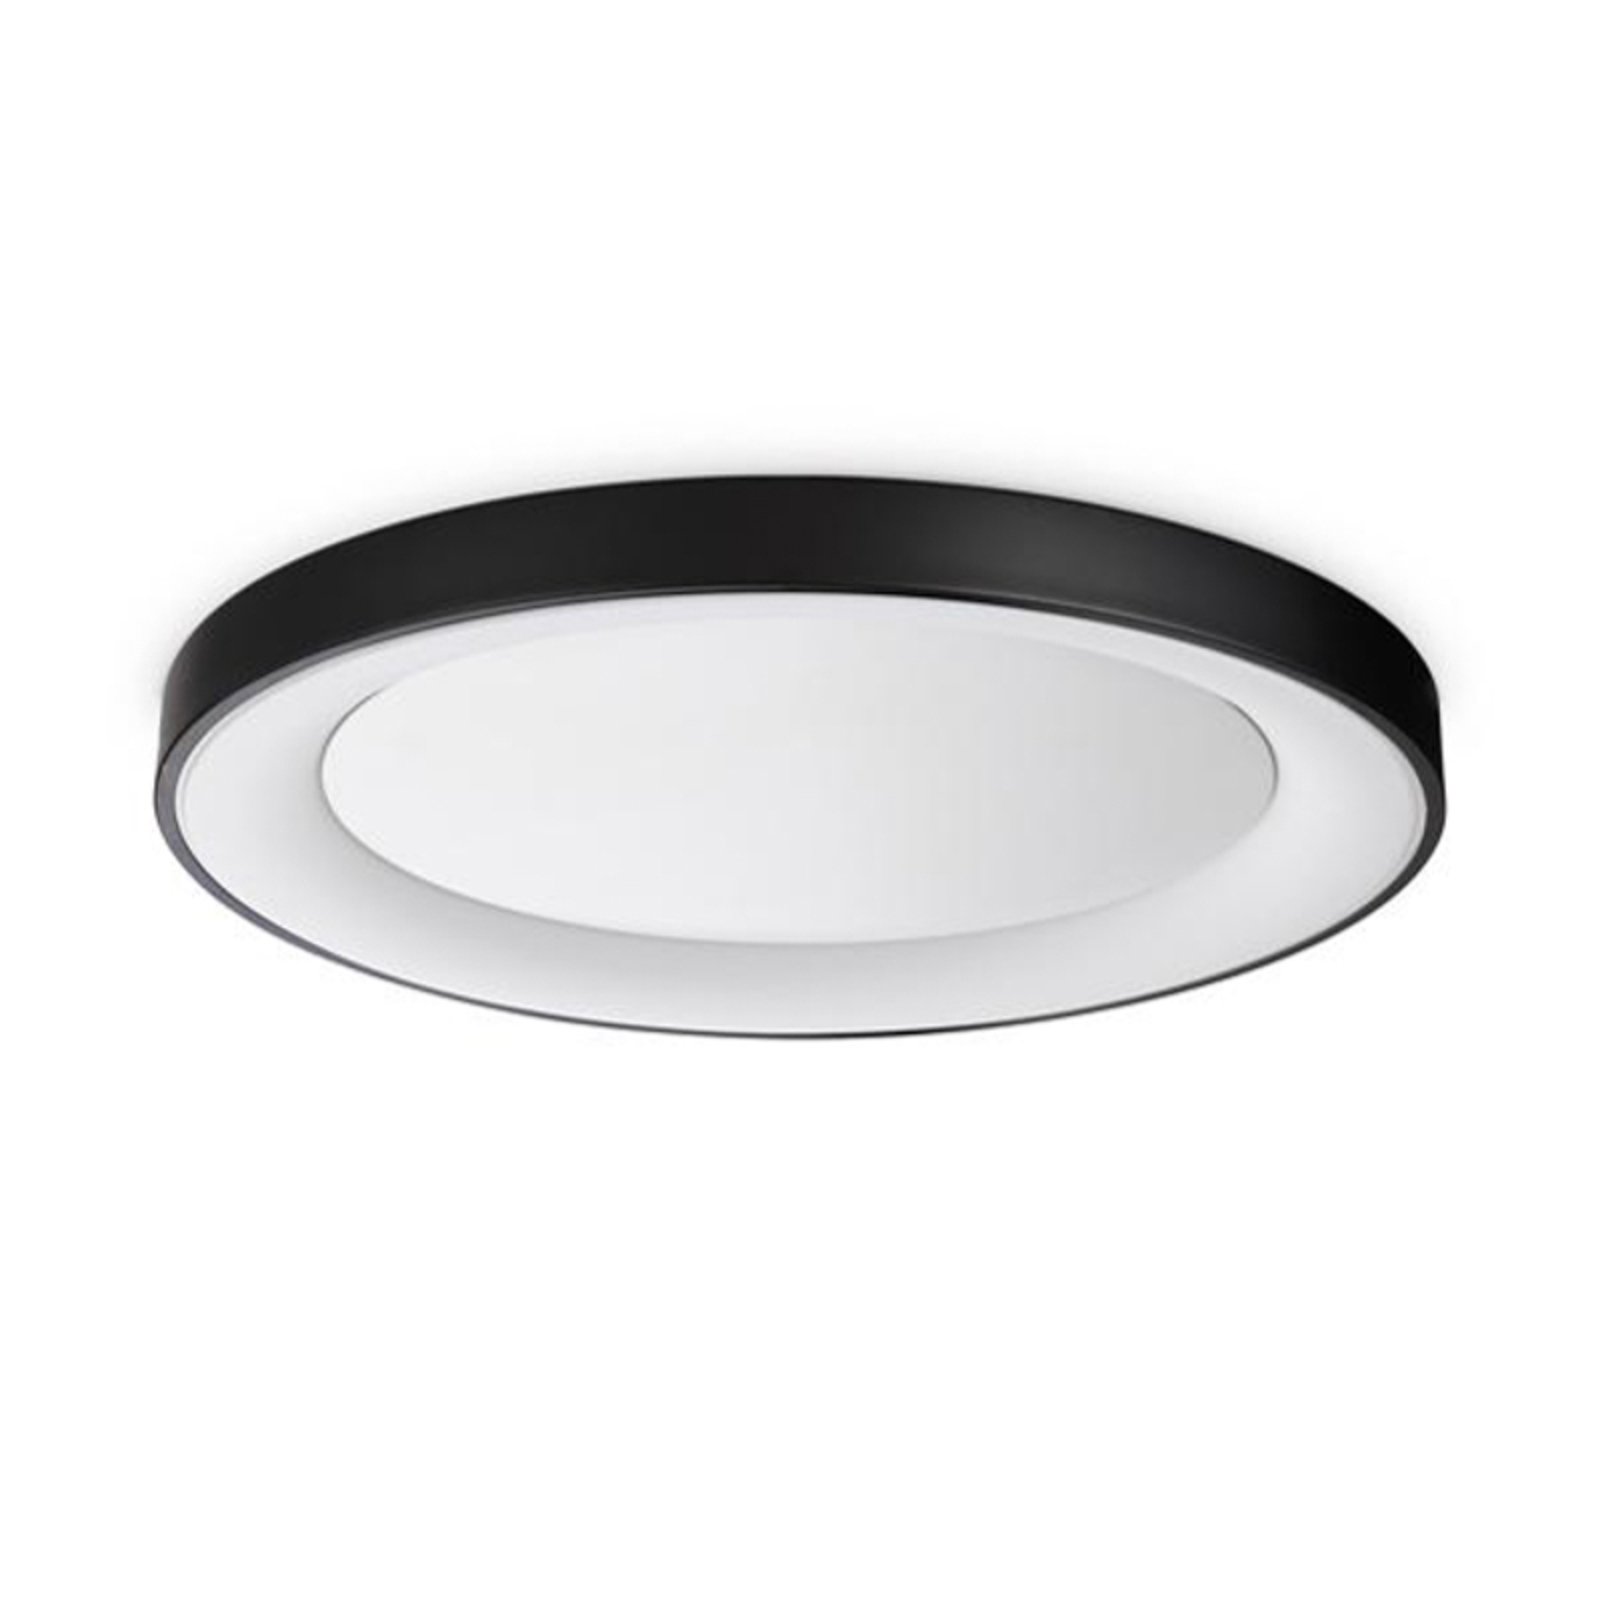 Ideal Lux taklampe Planet, svart, Ø 60 cm, metall